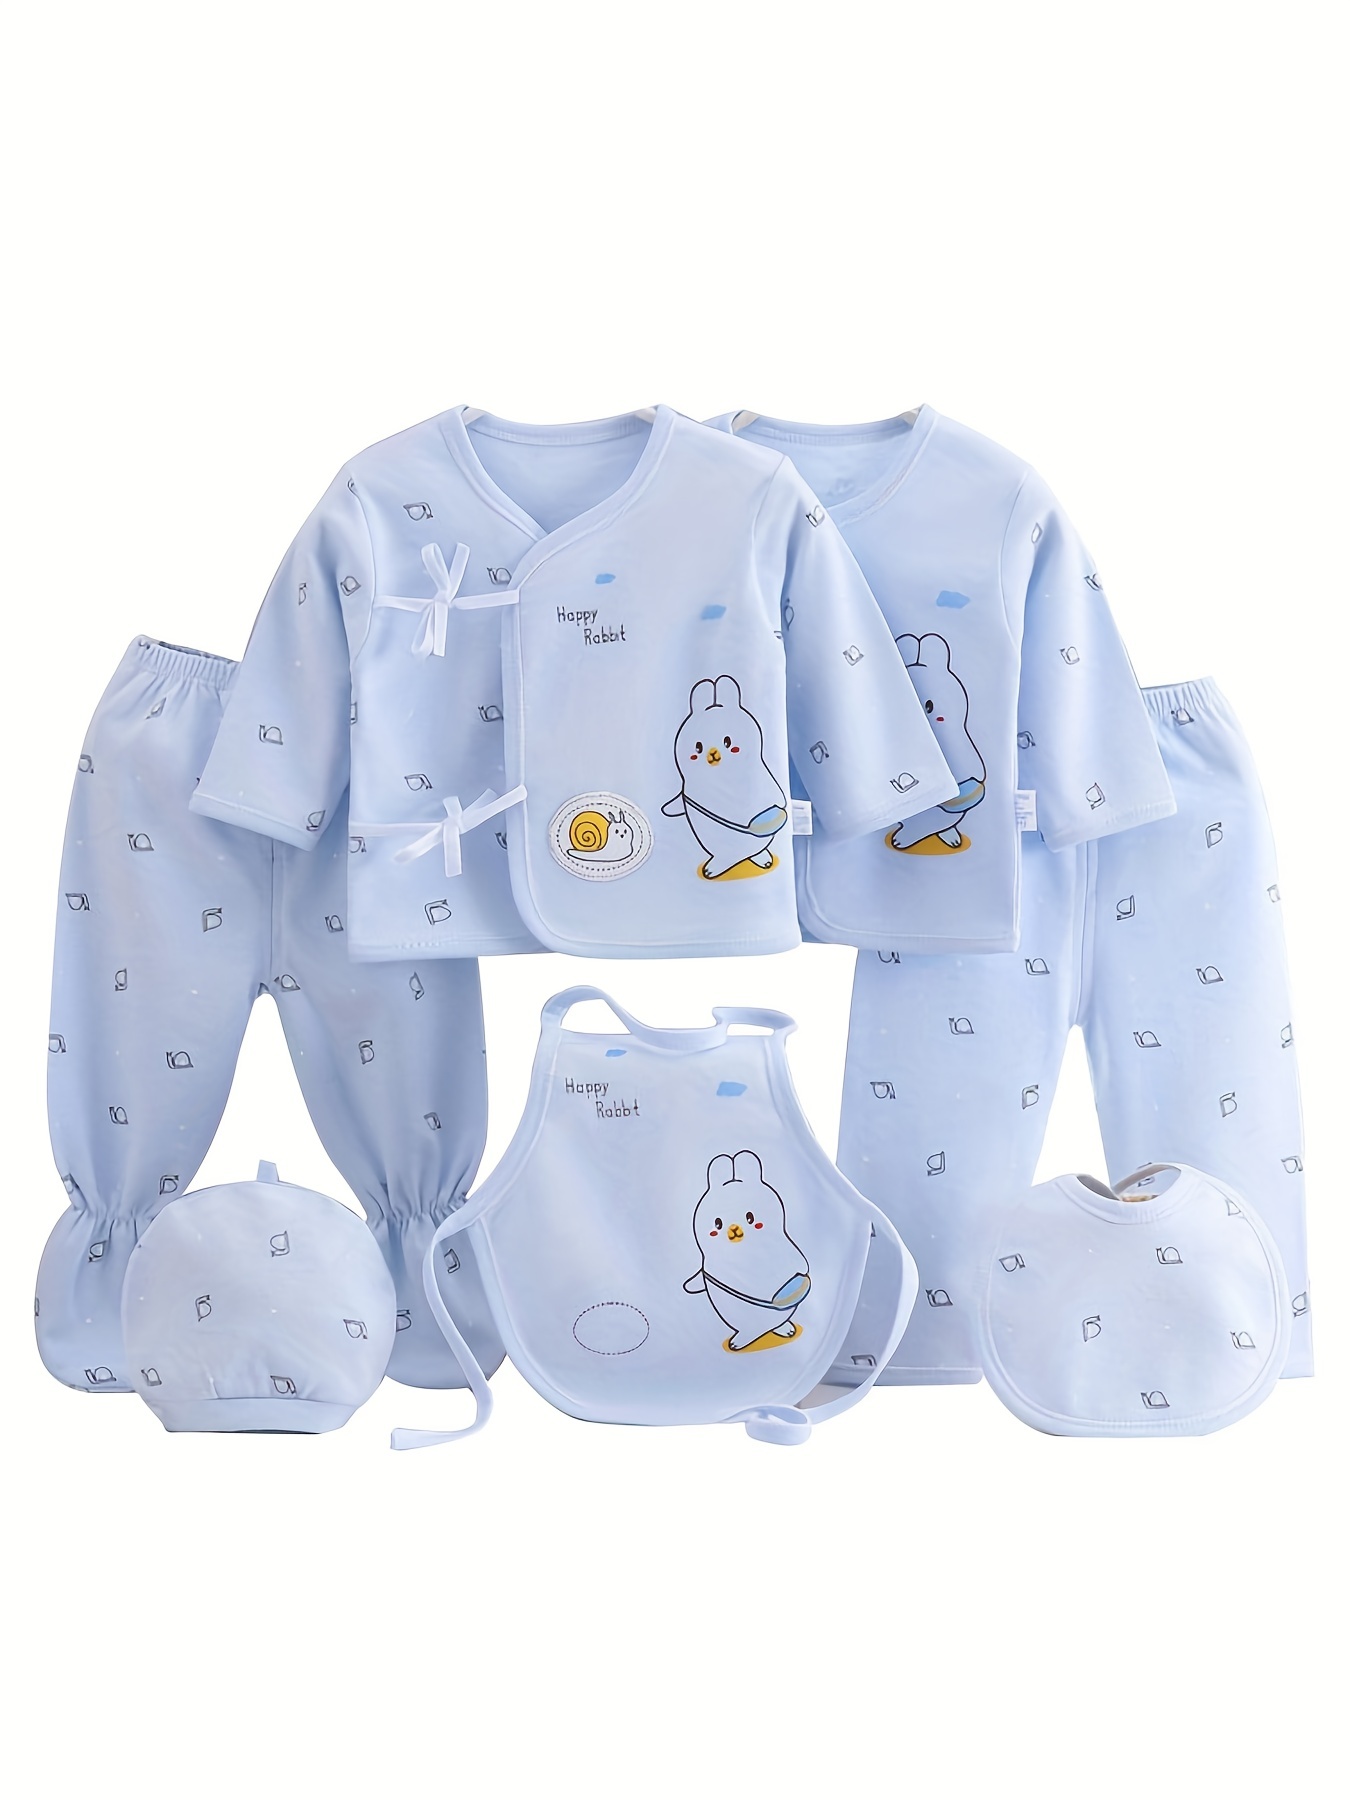 Toddler winter inner wear set 90 100 110cm, Babies & Kids, Babies